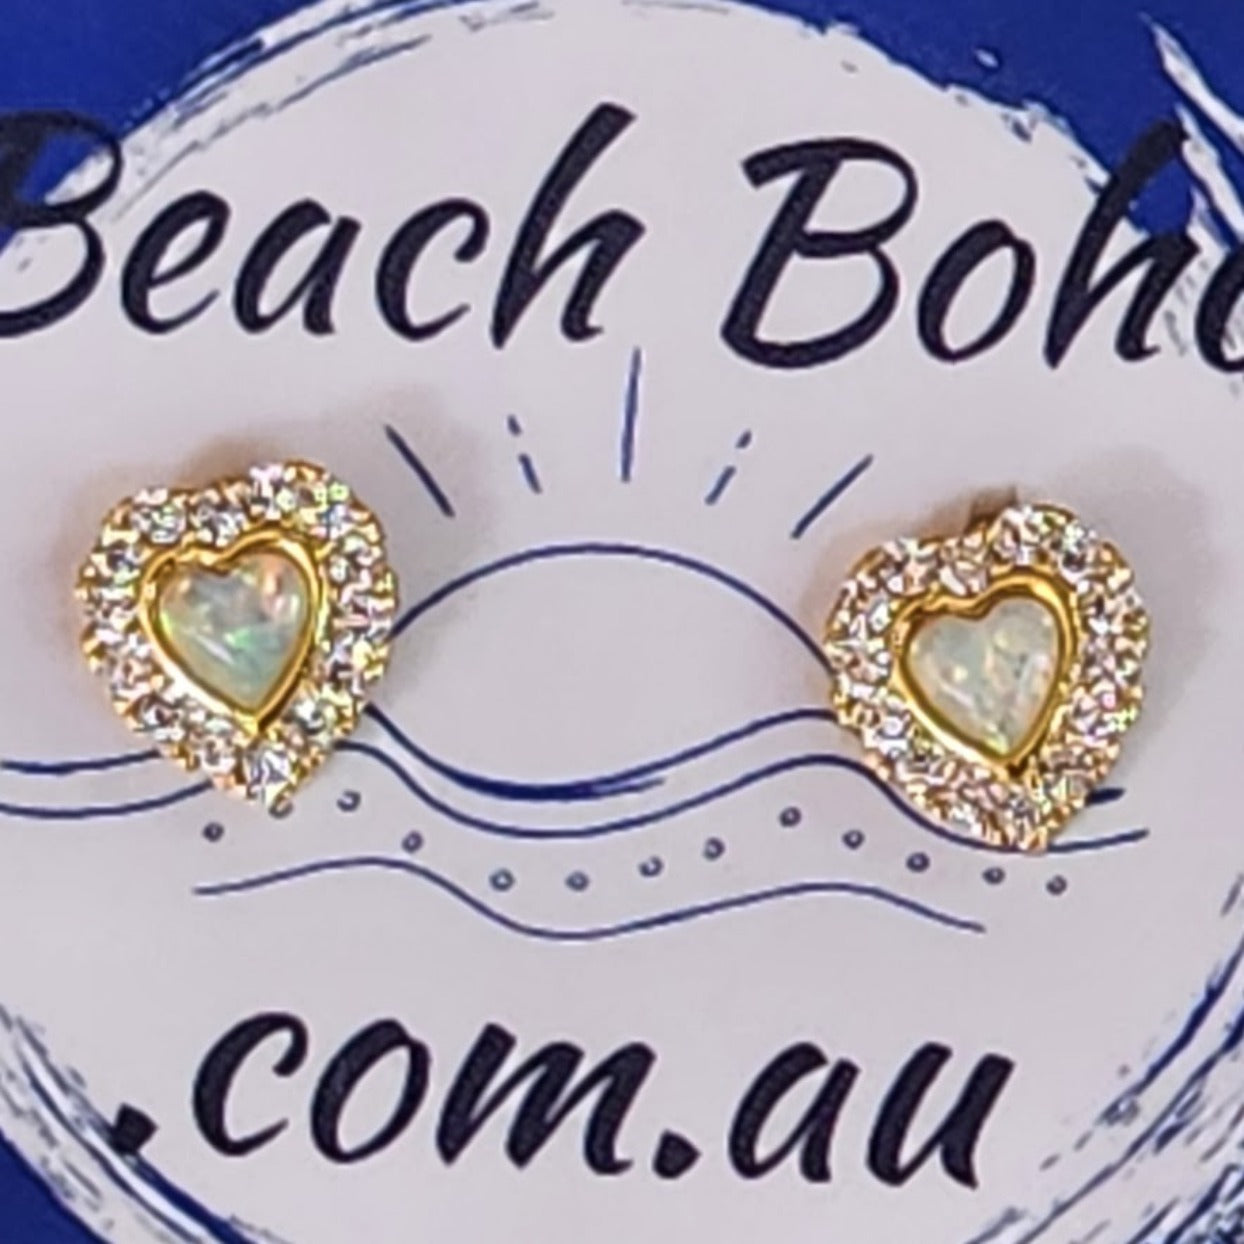 PURE OF HEART - PETITE VERMEIL STUD OPAL EARRINGS - Premium earrings from www.beachboho,com.au - Just $49! Shop now at www.beachboho.com.au